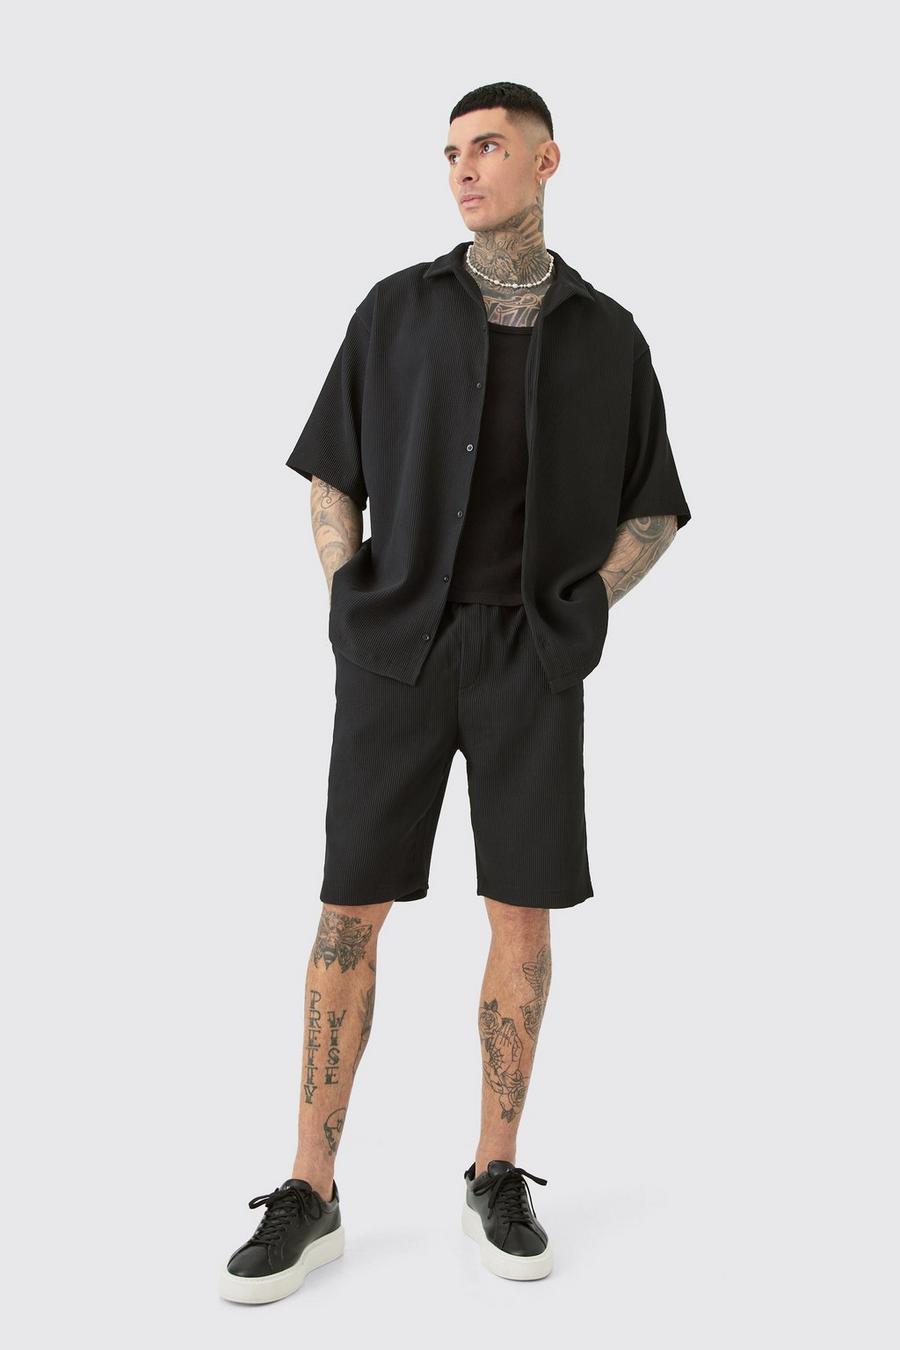 Black Tall Oversized Short Sleeve Pleated Shirt & Short Set